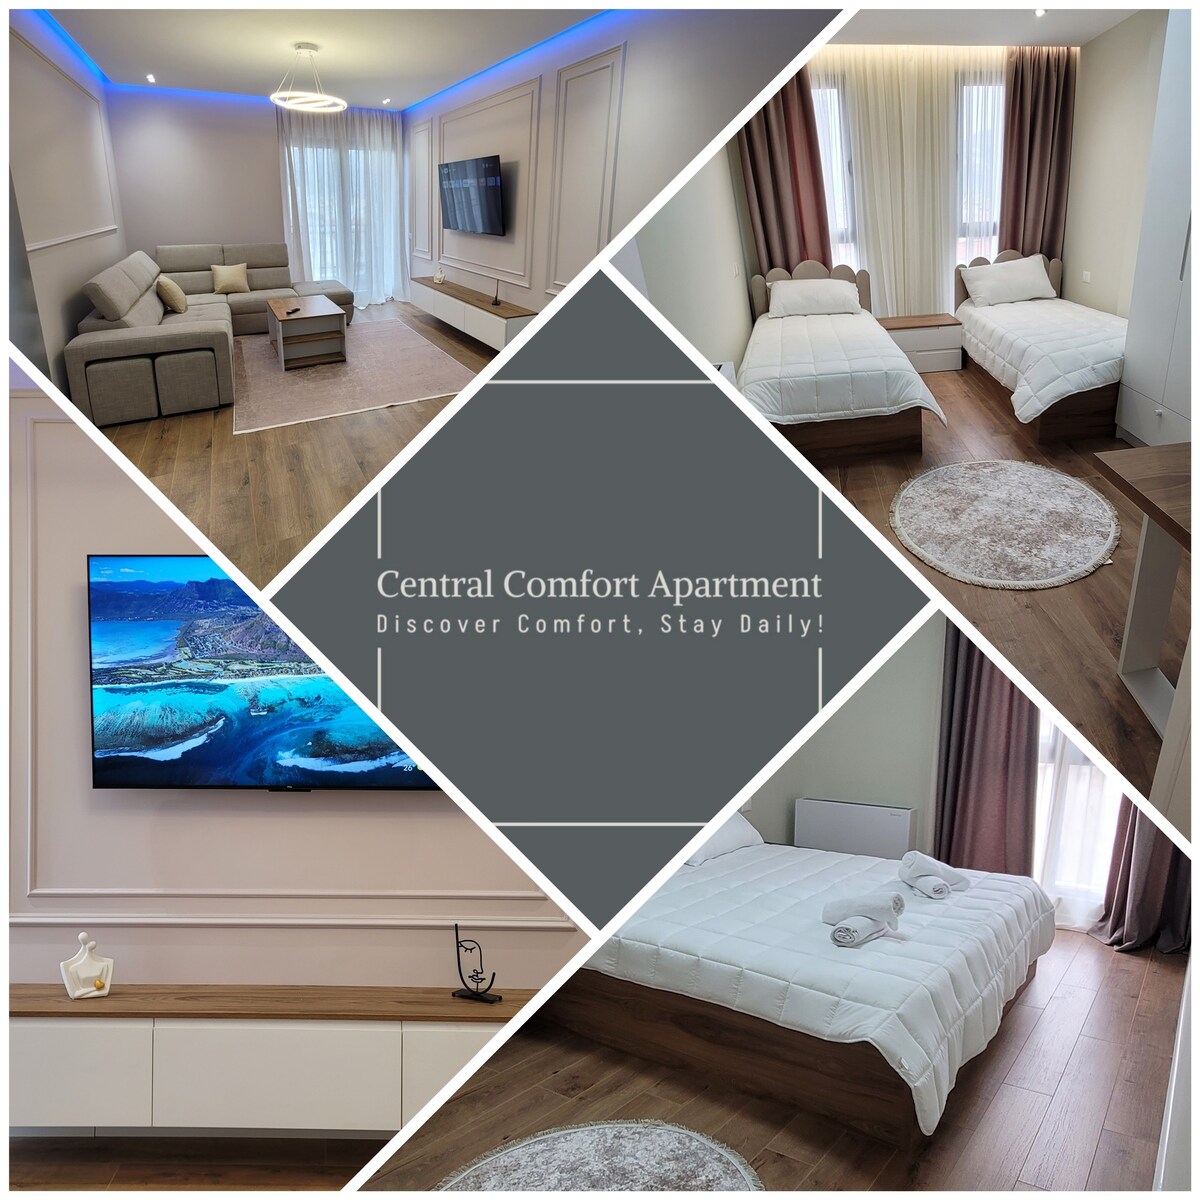 Central Comfort Apartment